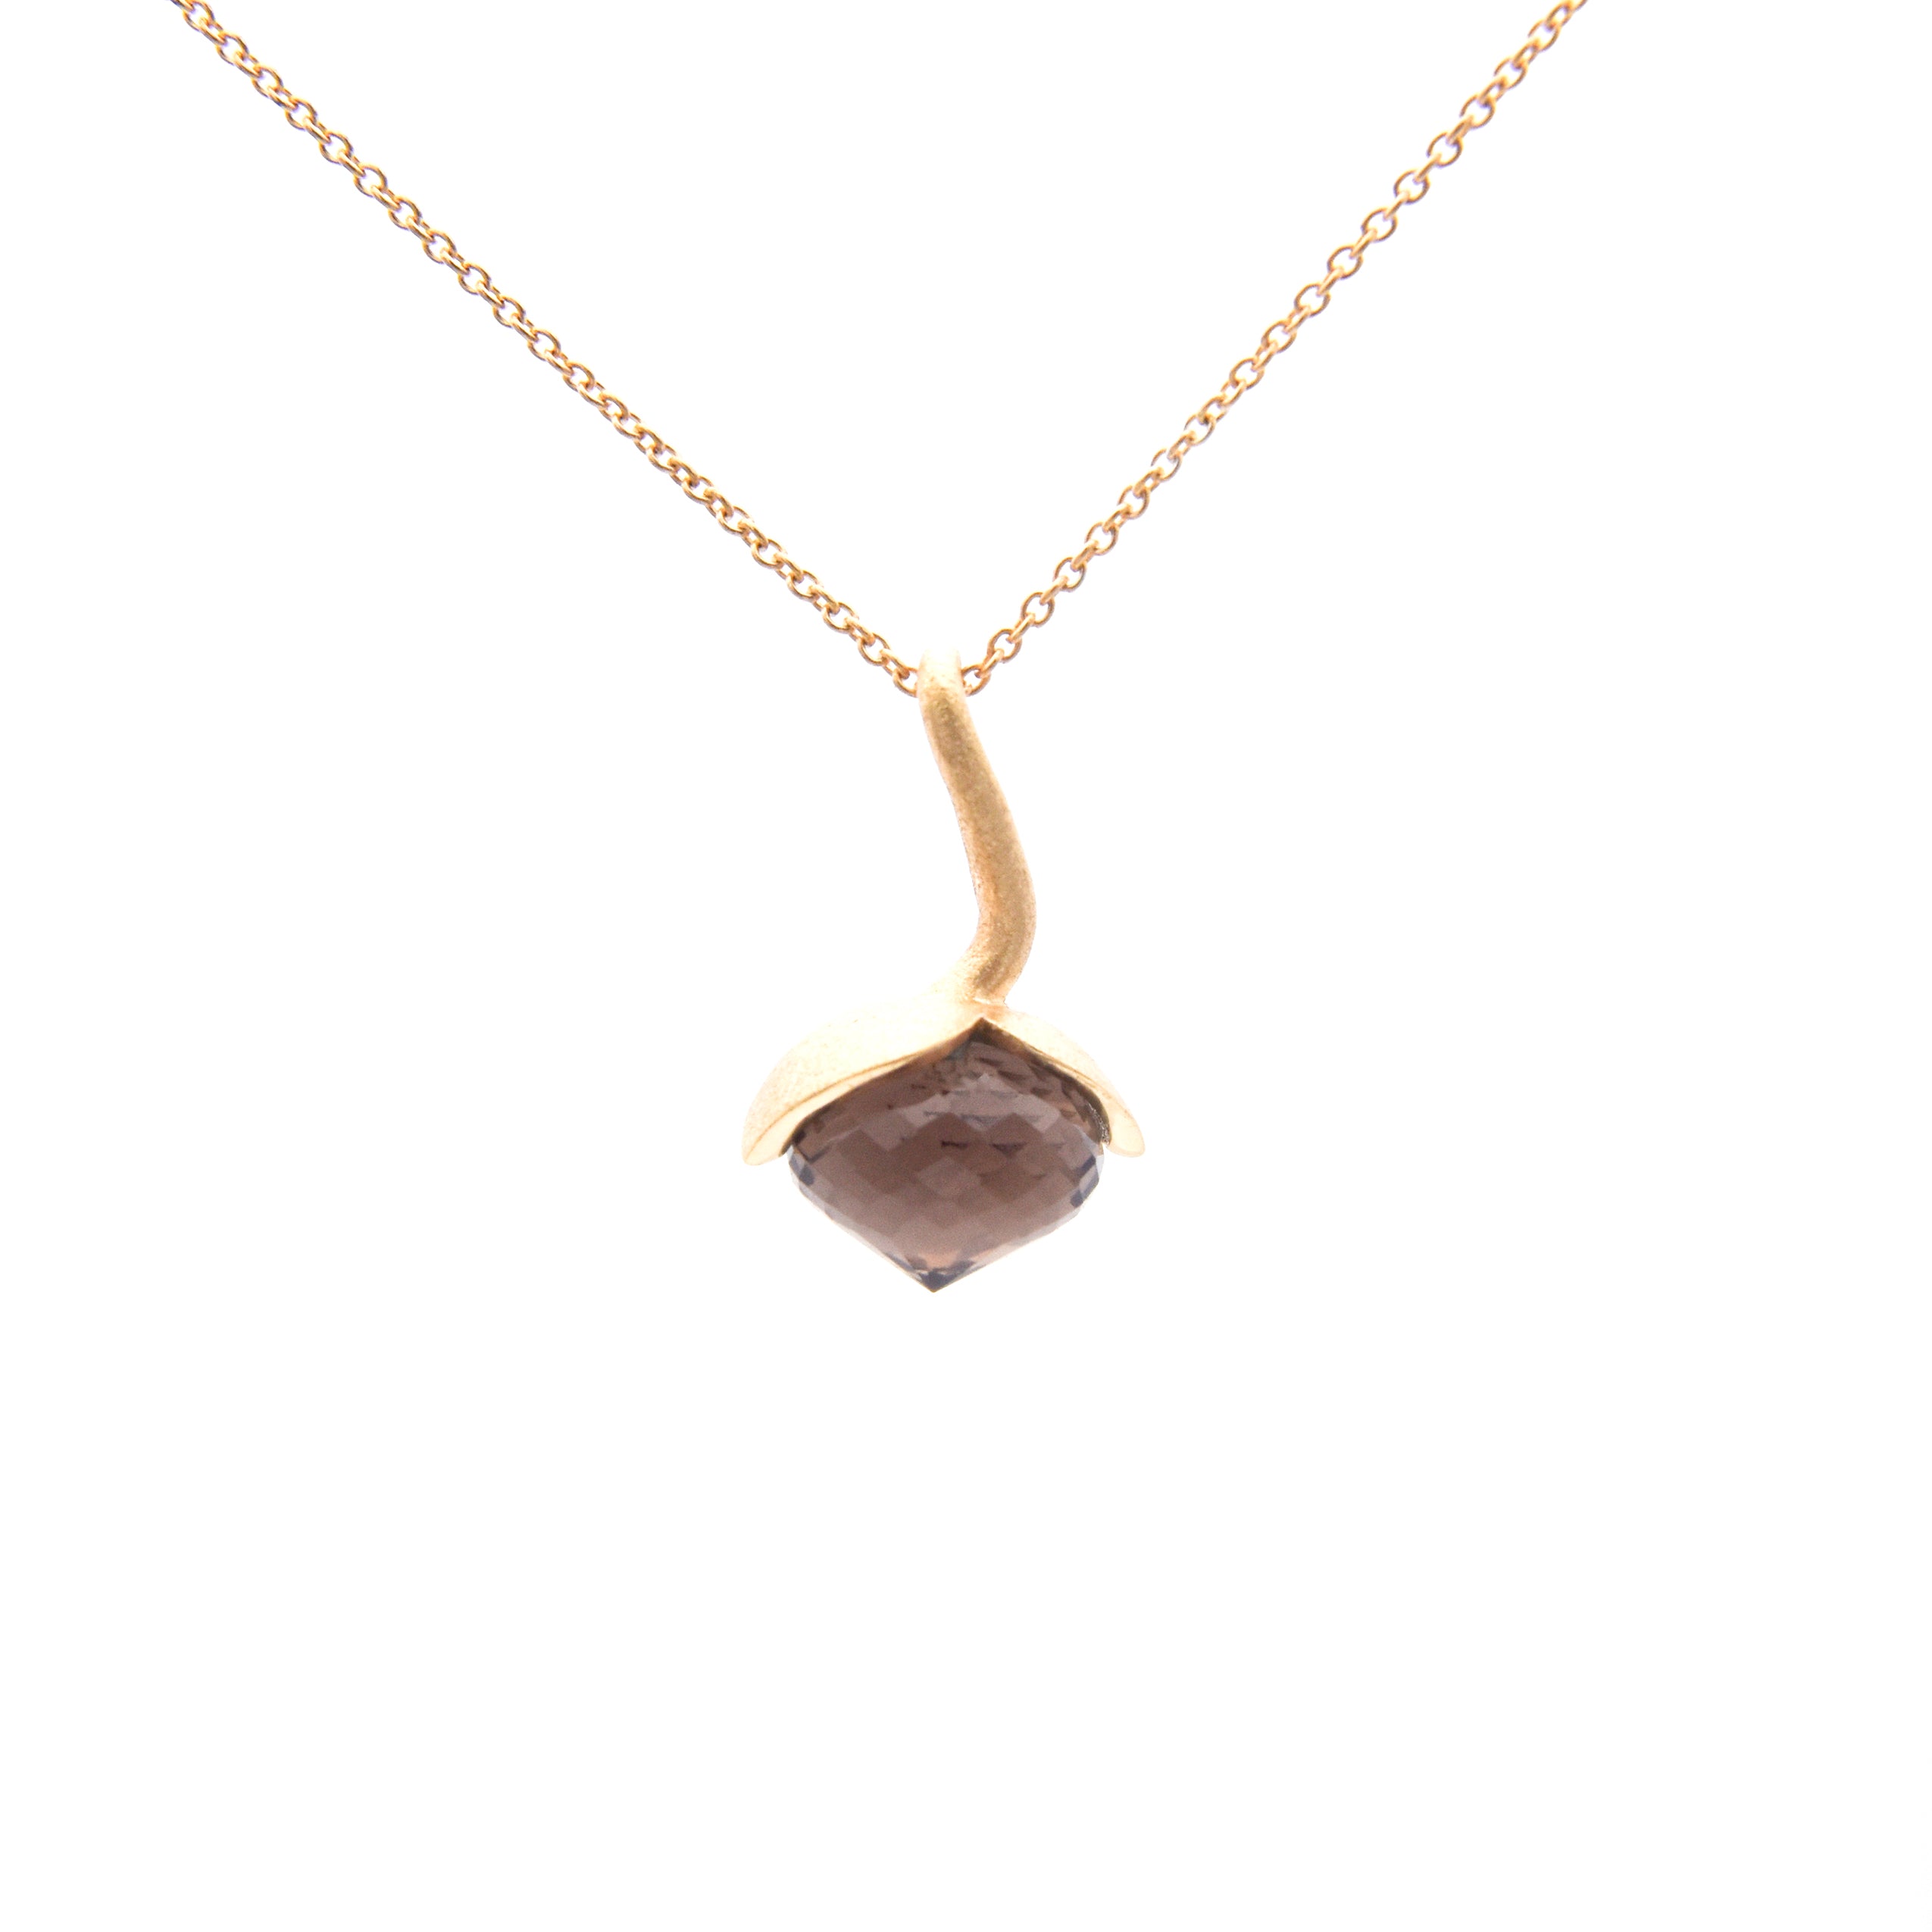 Dolce pendant "medium" with smoky quartz 925/-